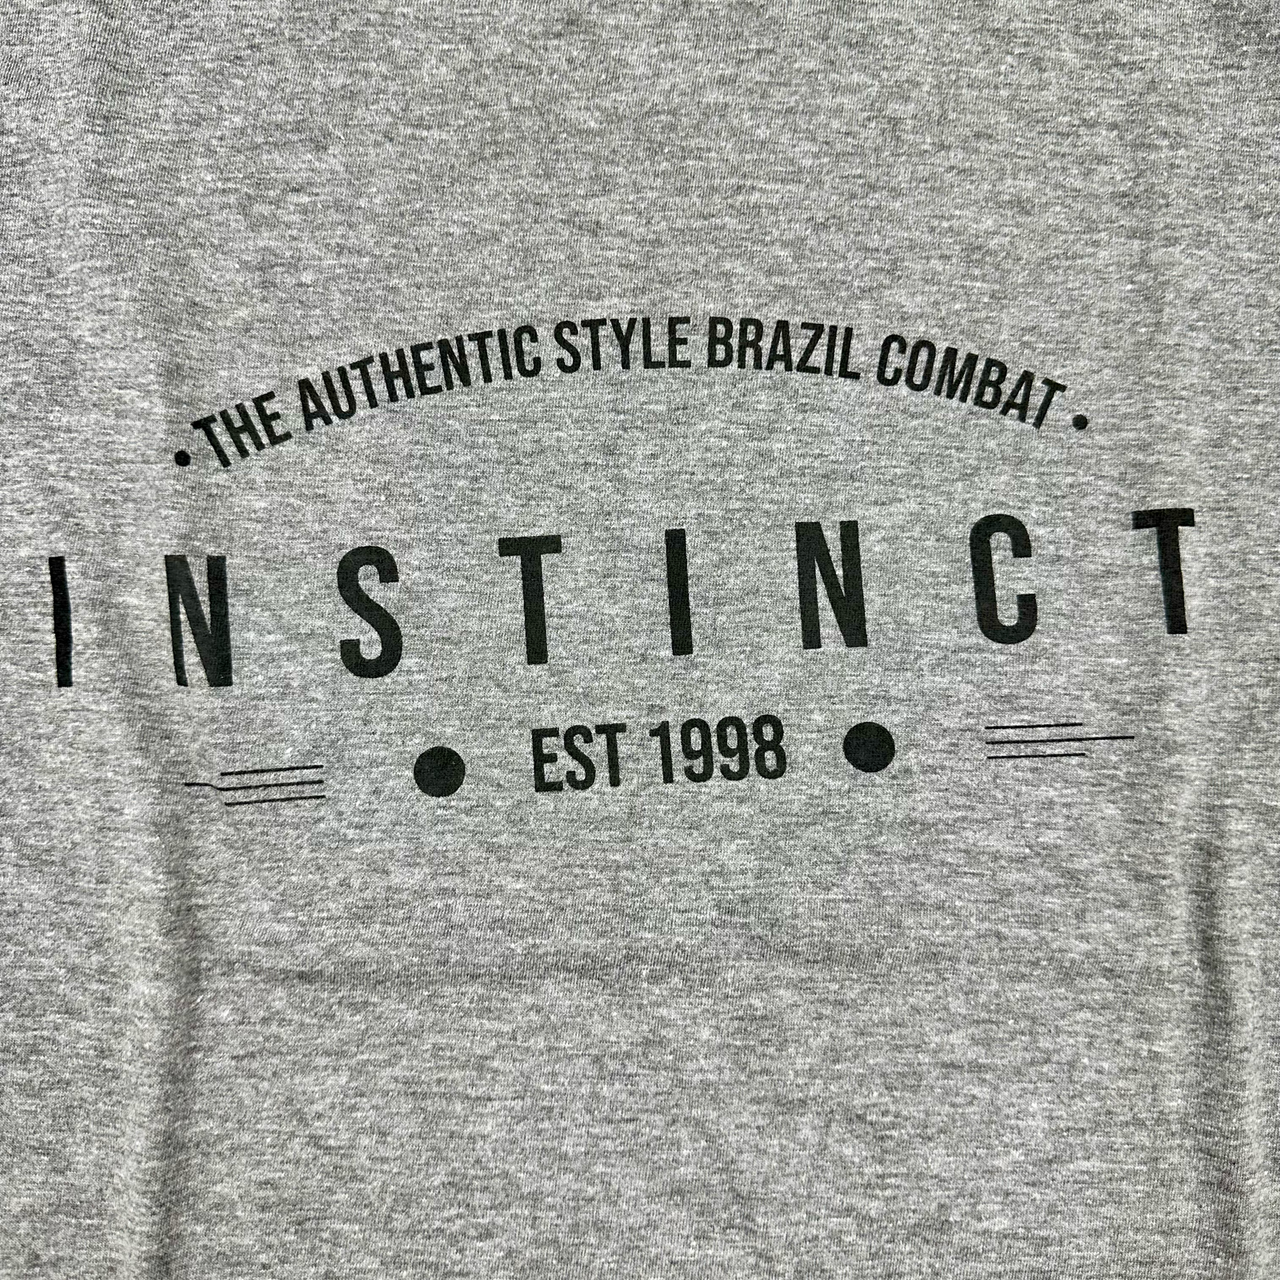 Instinct Jiu Jitsu T-shirt